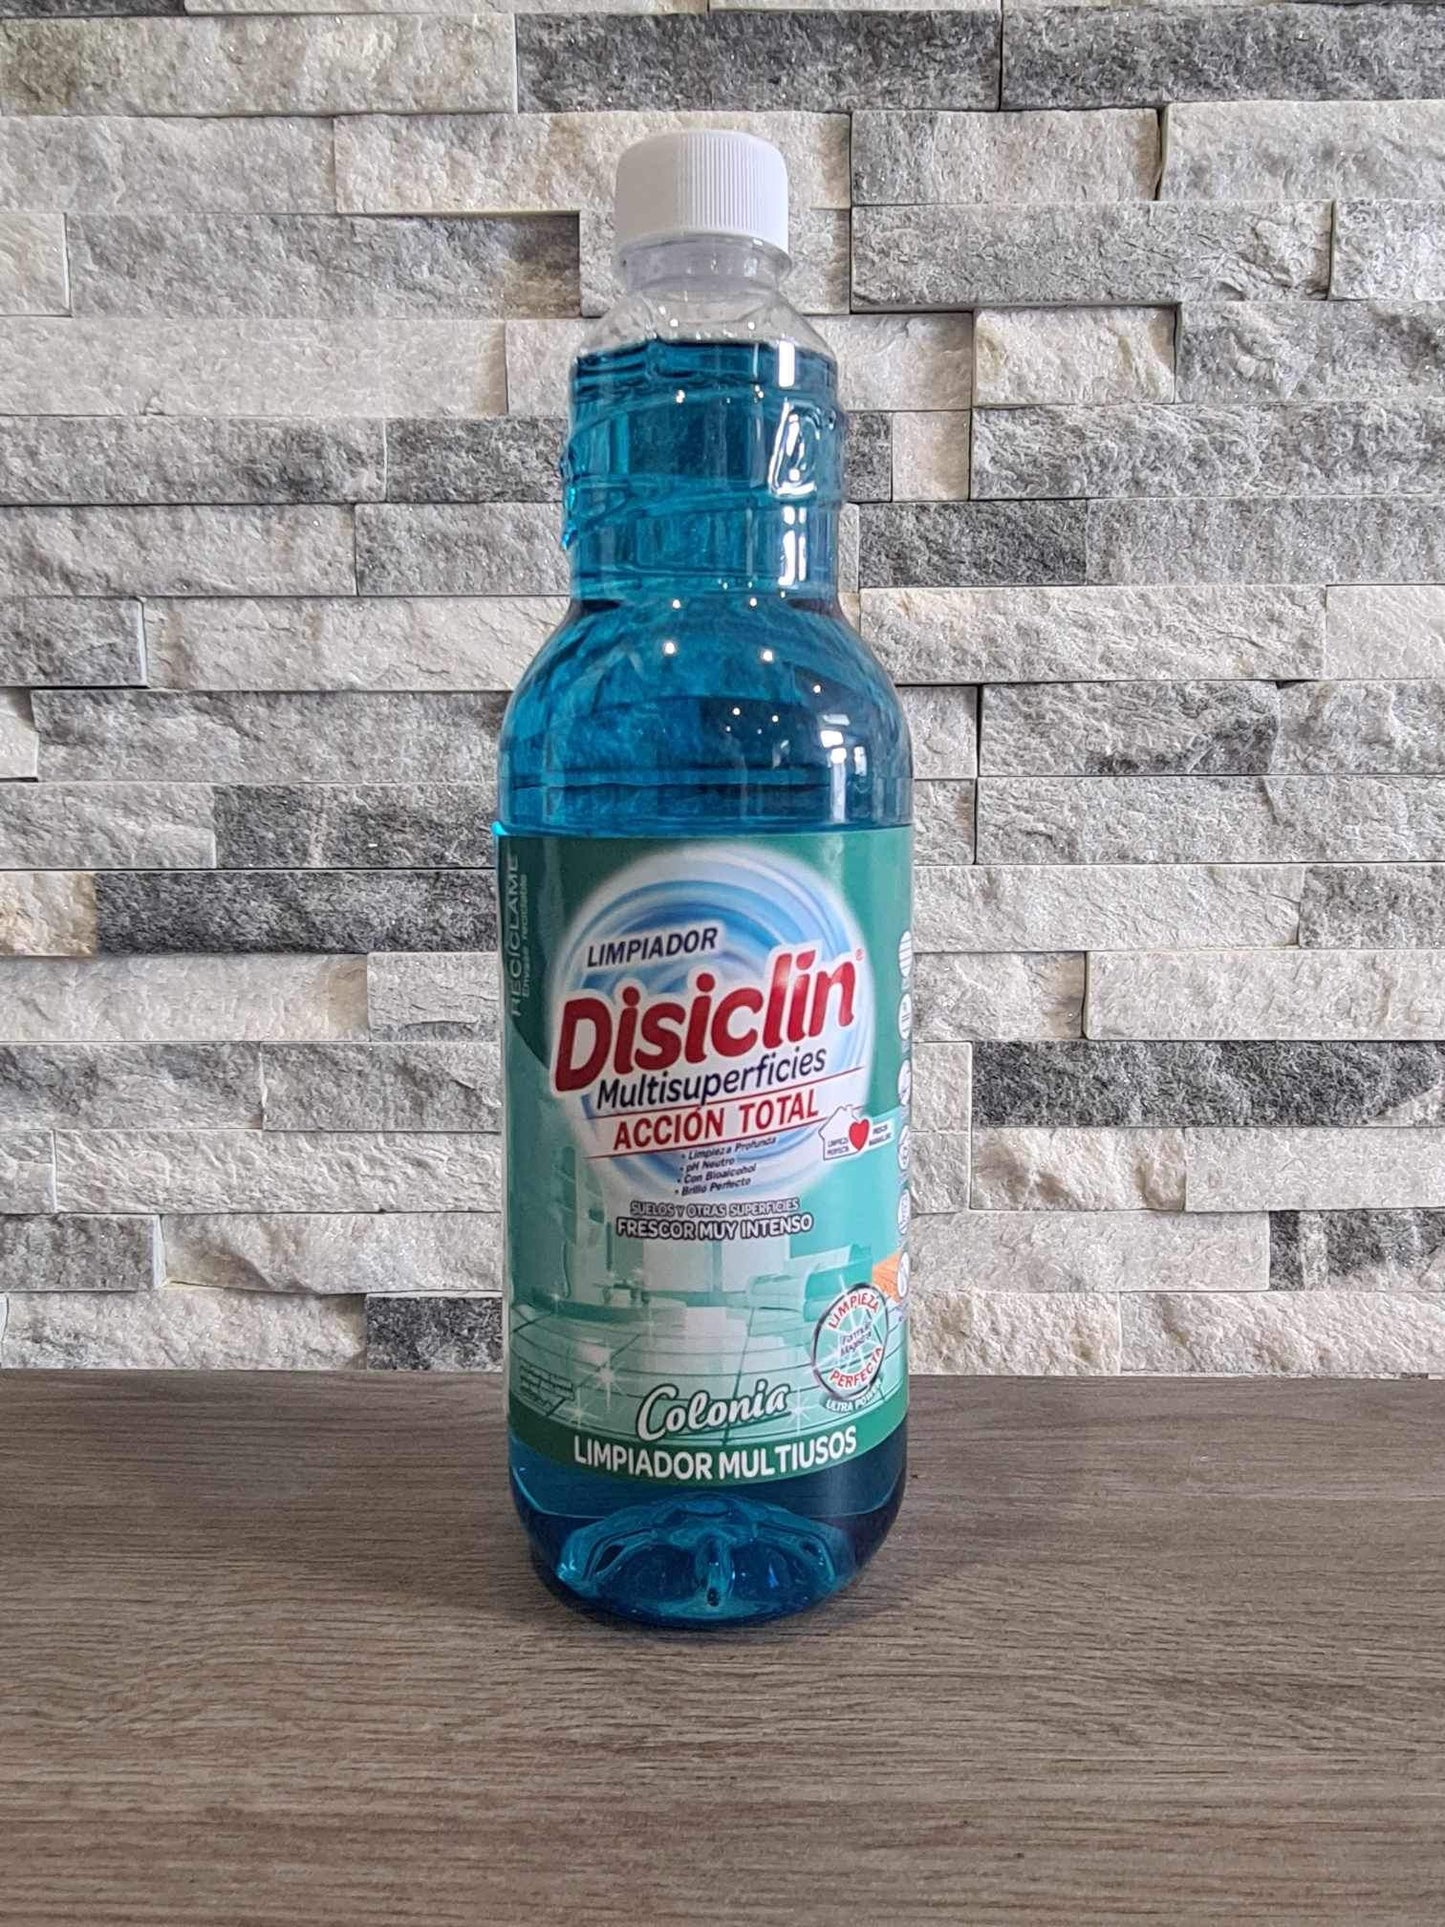 Disiclin Multi-Purpose Disinfectant Spray – Spanish kleen freaks